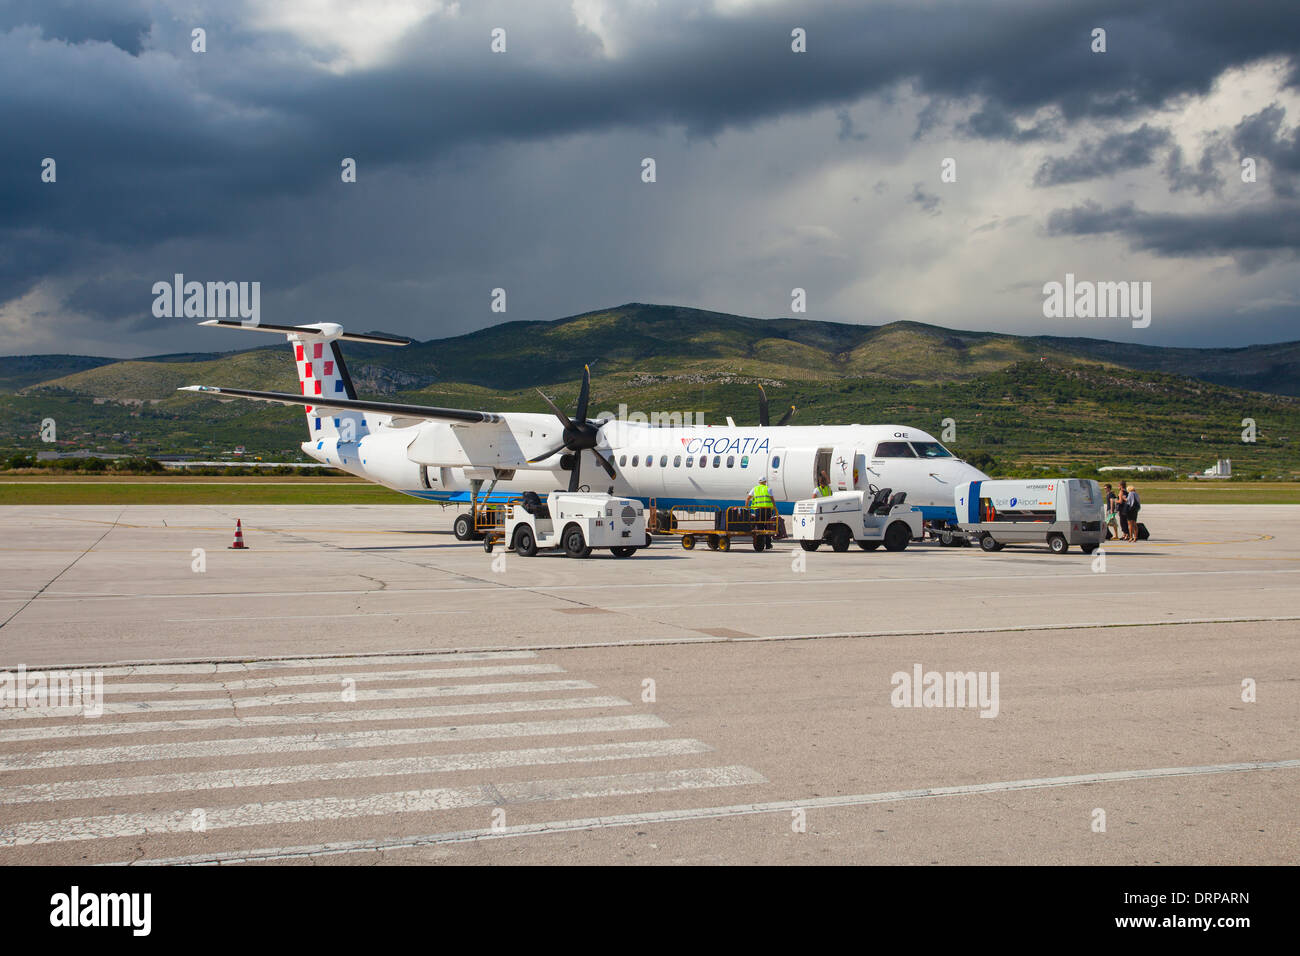 SPLIT, CROATIA - JUN 6: Croatia Airlines Dash 8 Q400 parked on a runway of Split Airport during boarding on June 6, 2013 Stock Photo